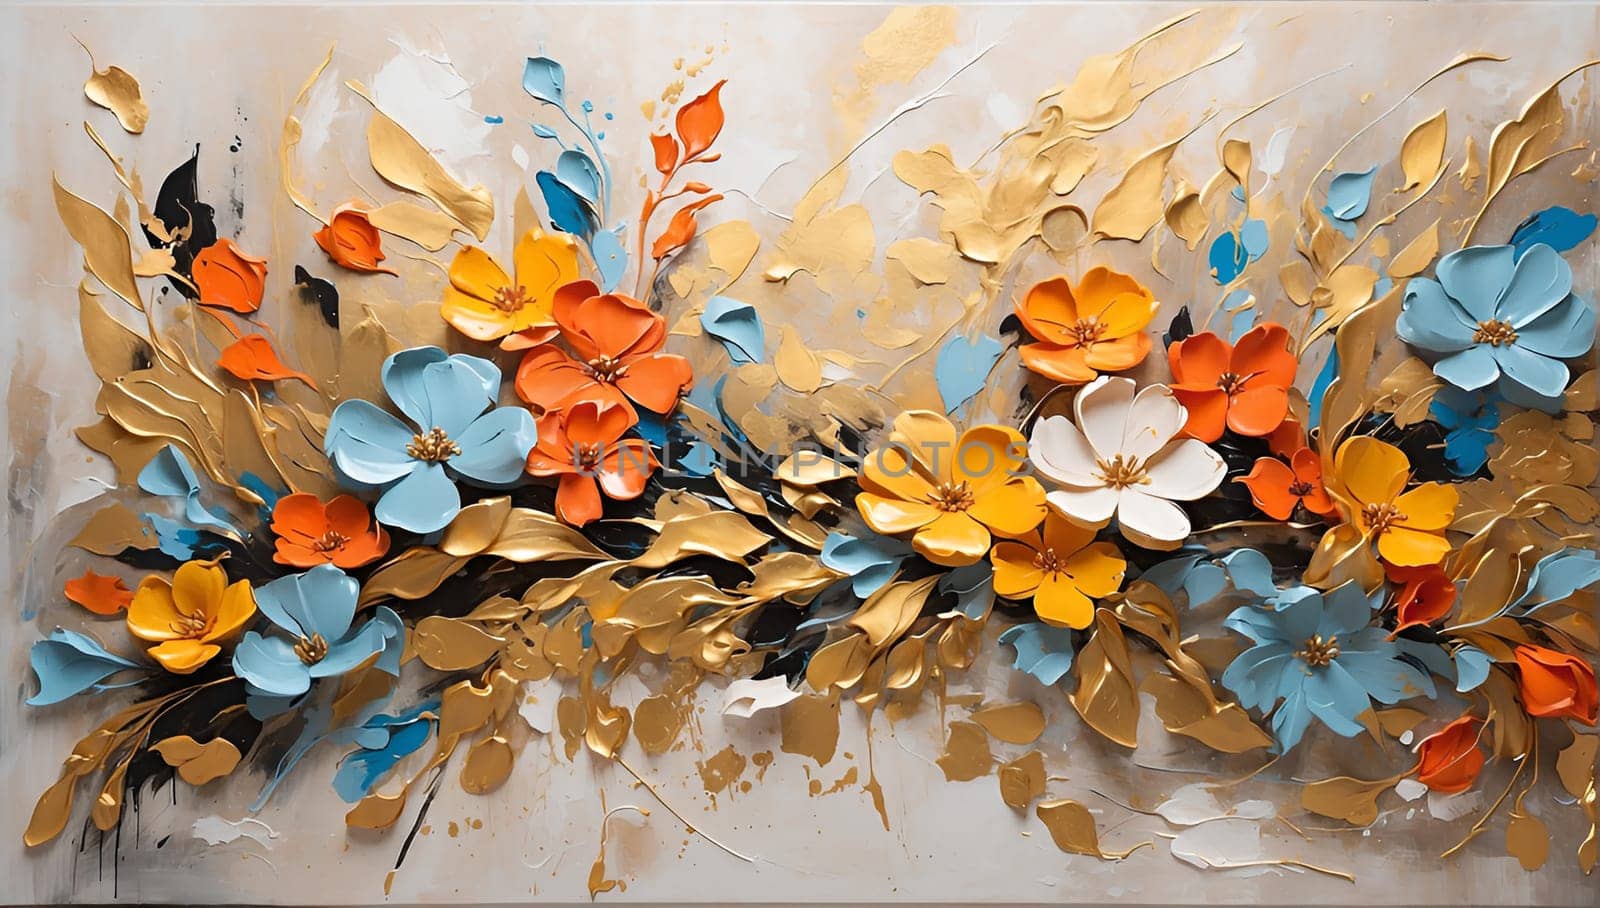 Colorful floral arrangement of flowers using multicolored acrylic paints